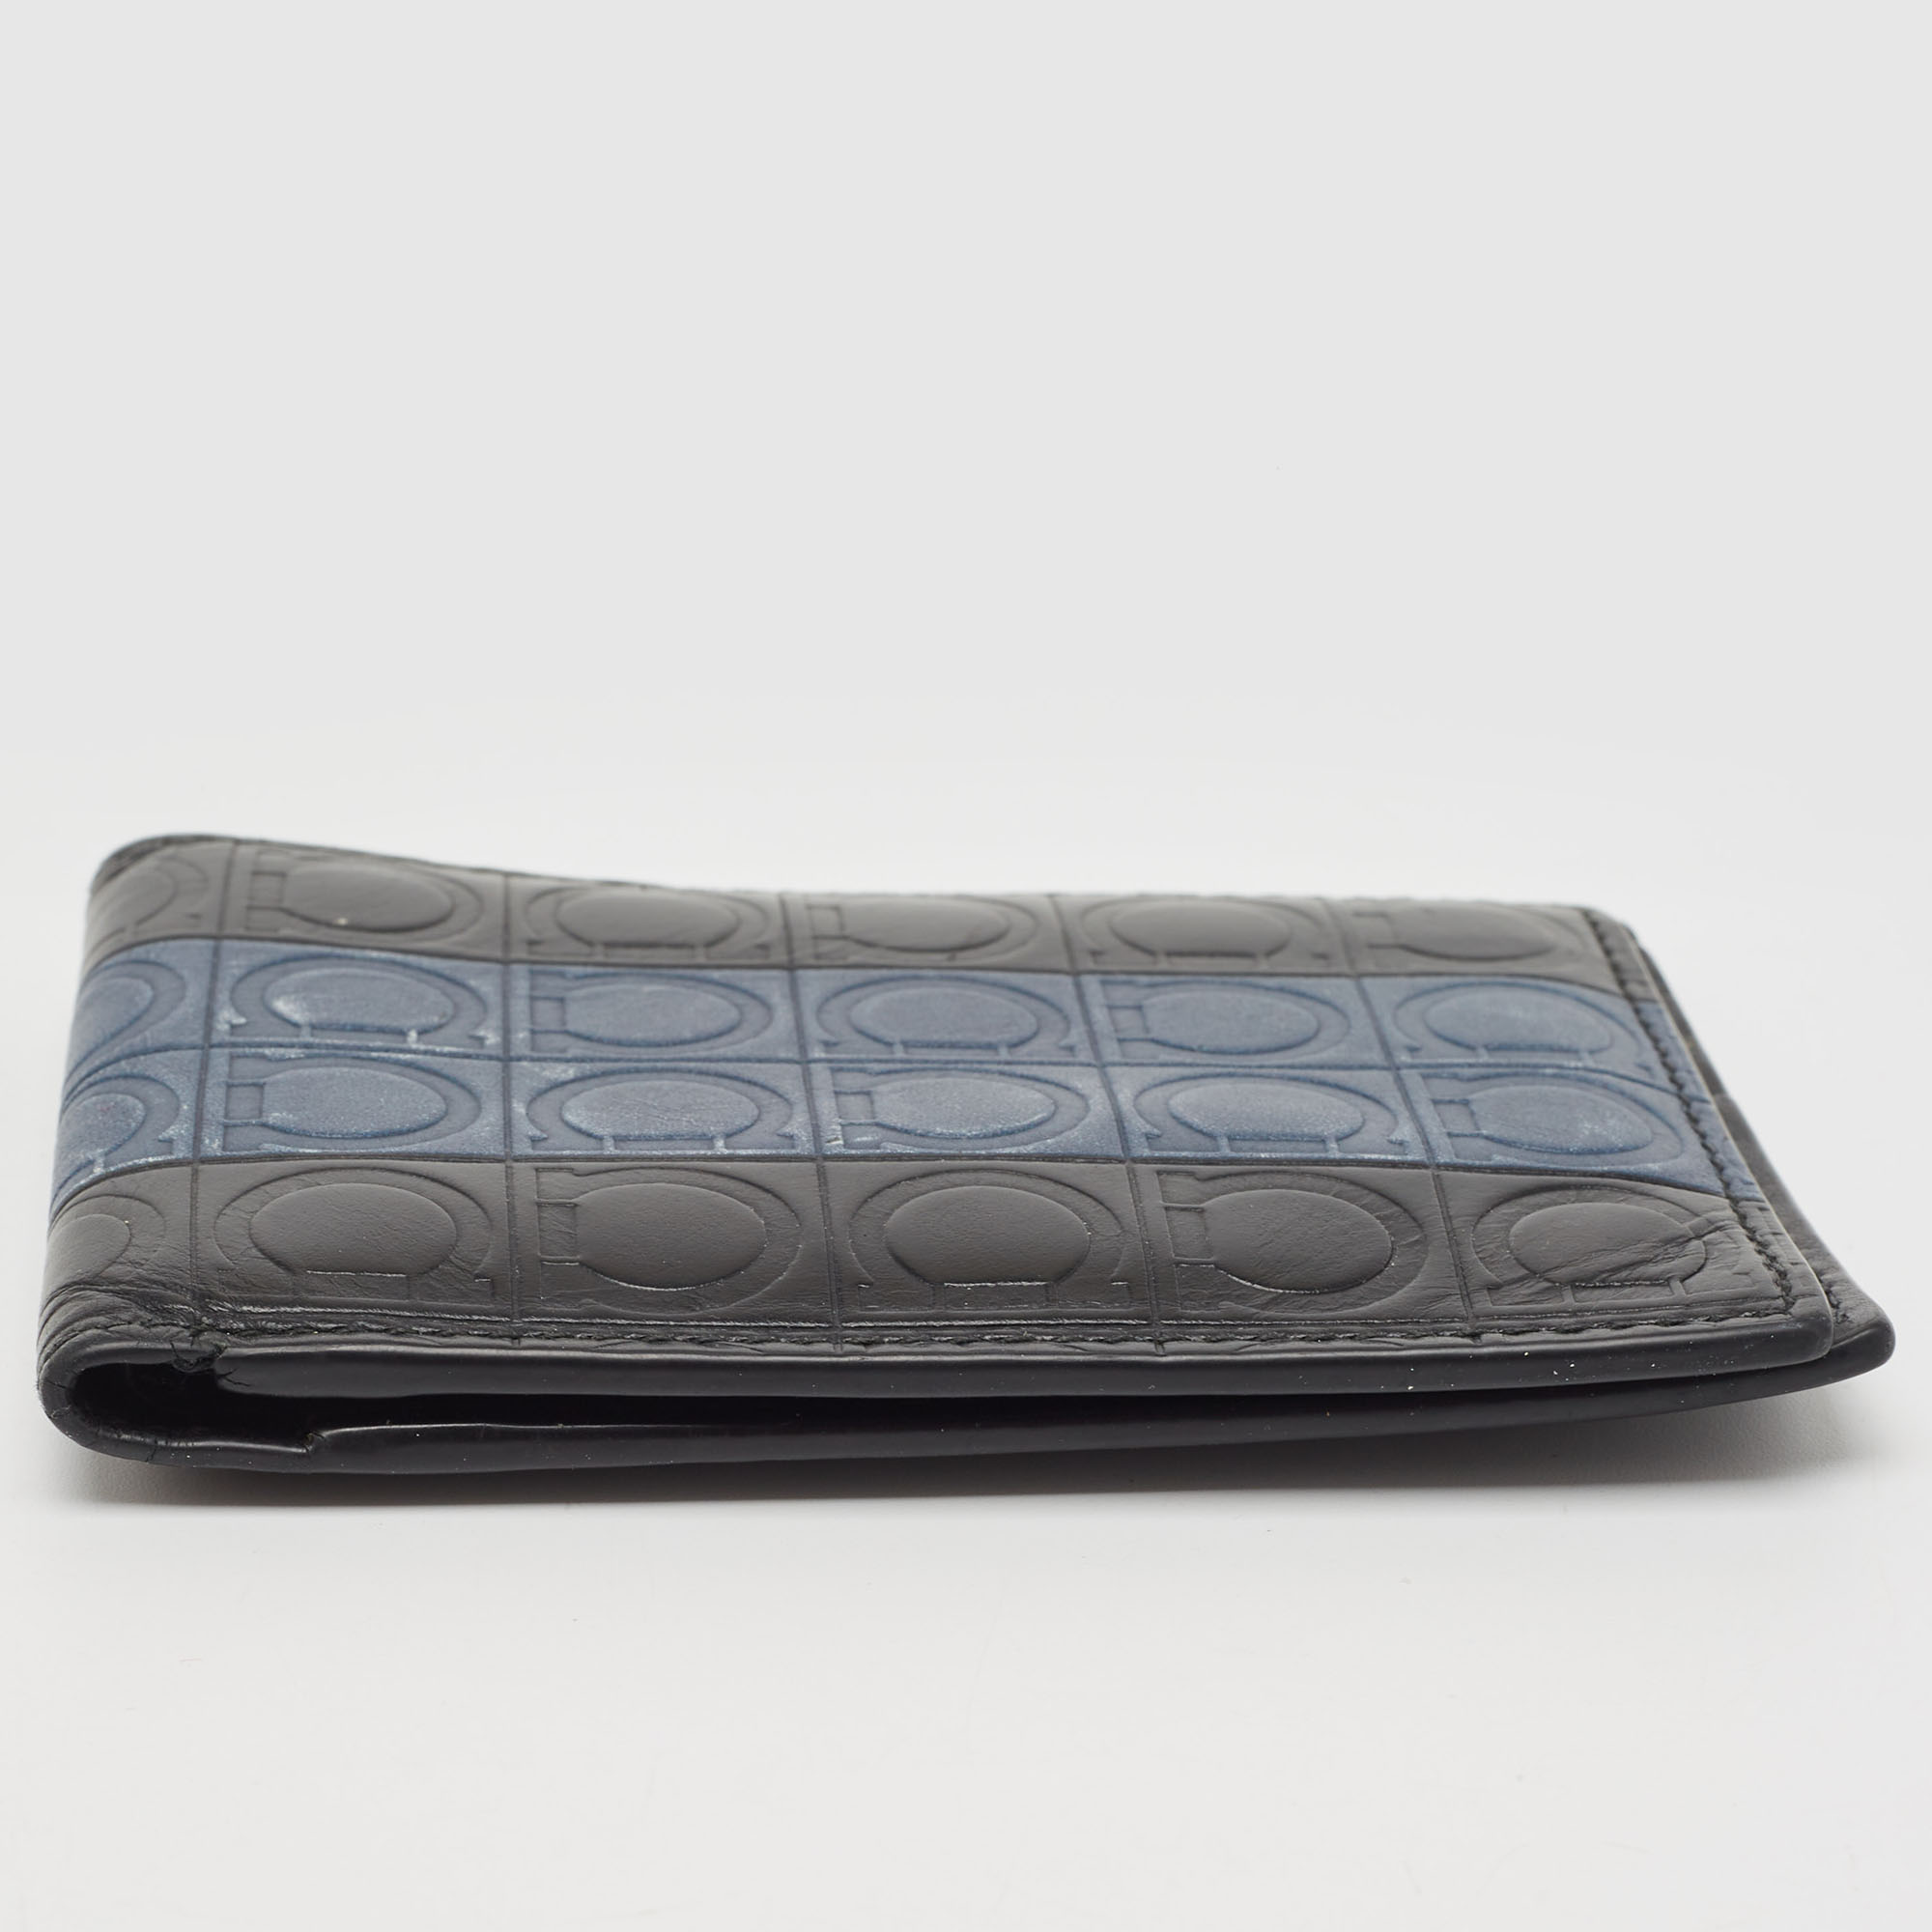 Salvatore Ferragamo Black/Blue Logo Embossed Leather Bifold Wallet